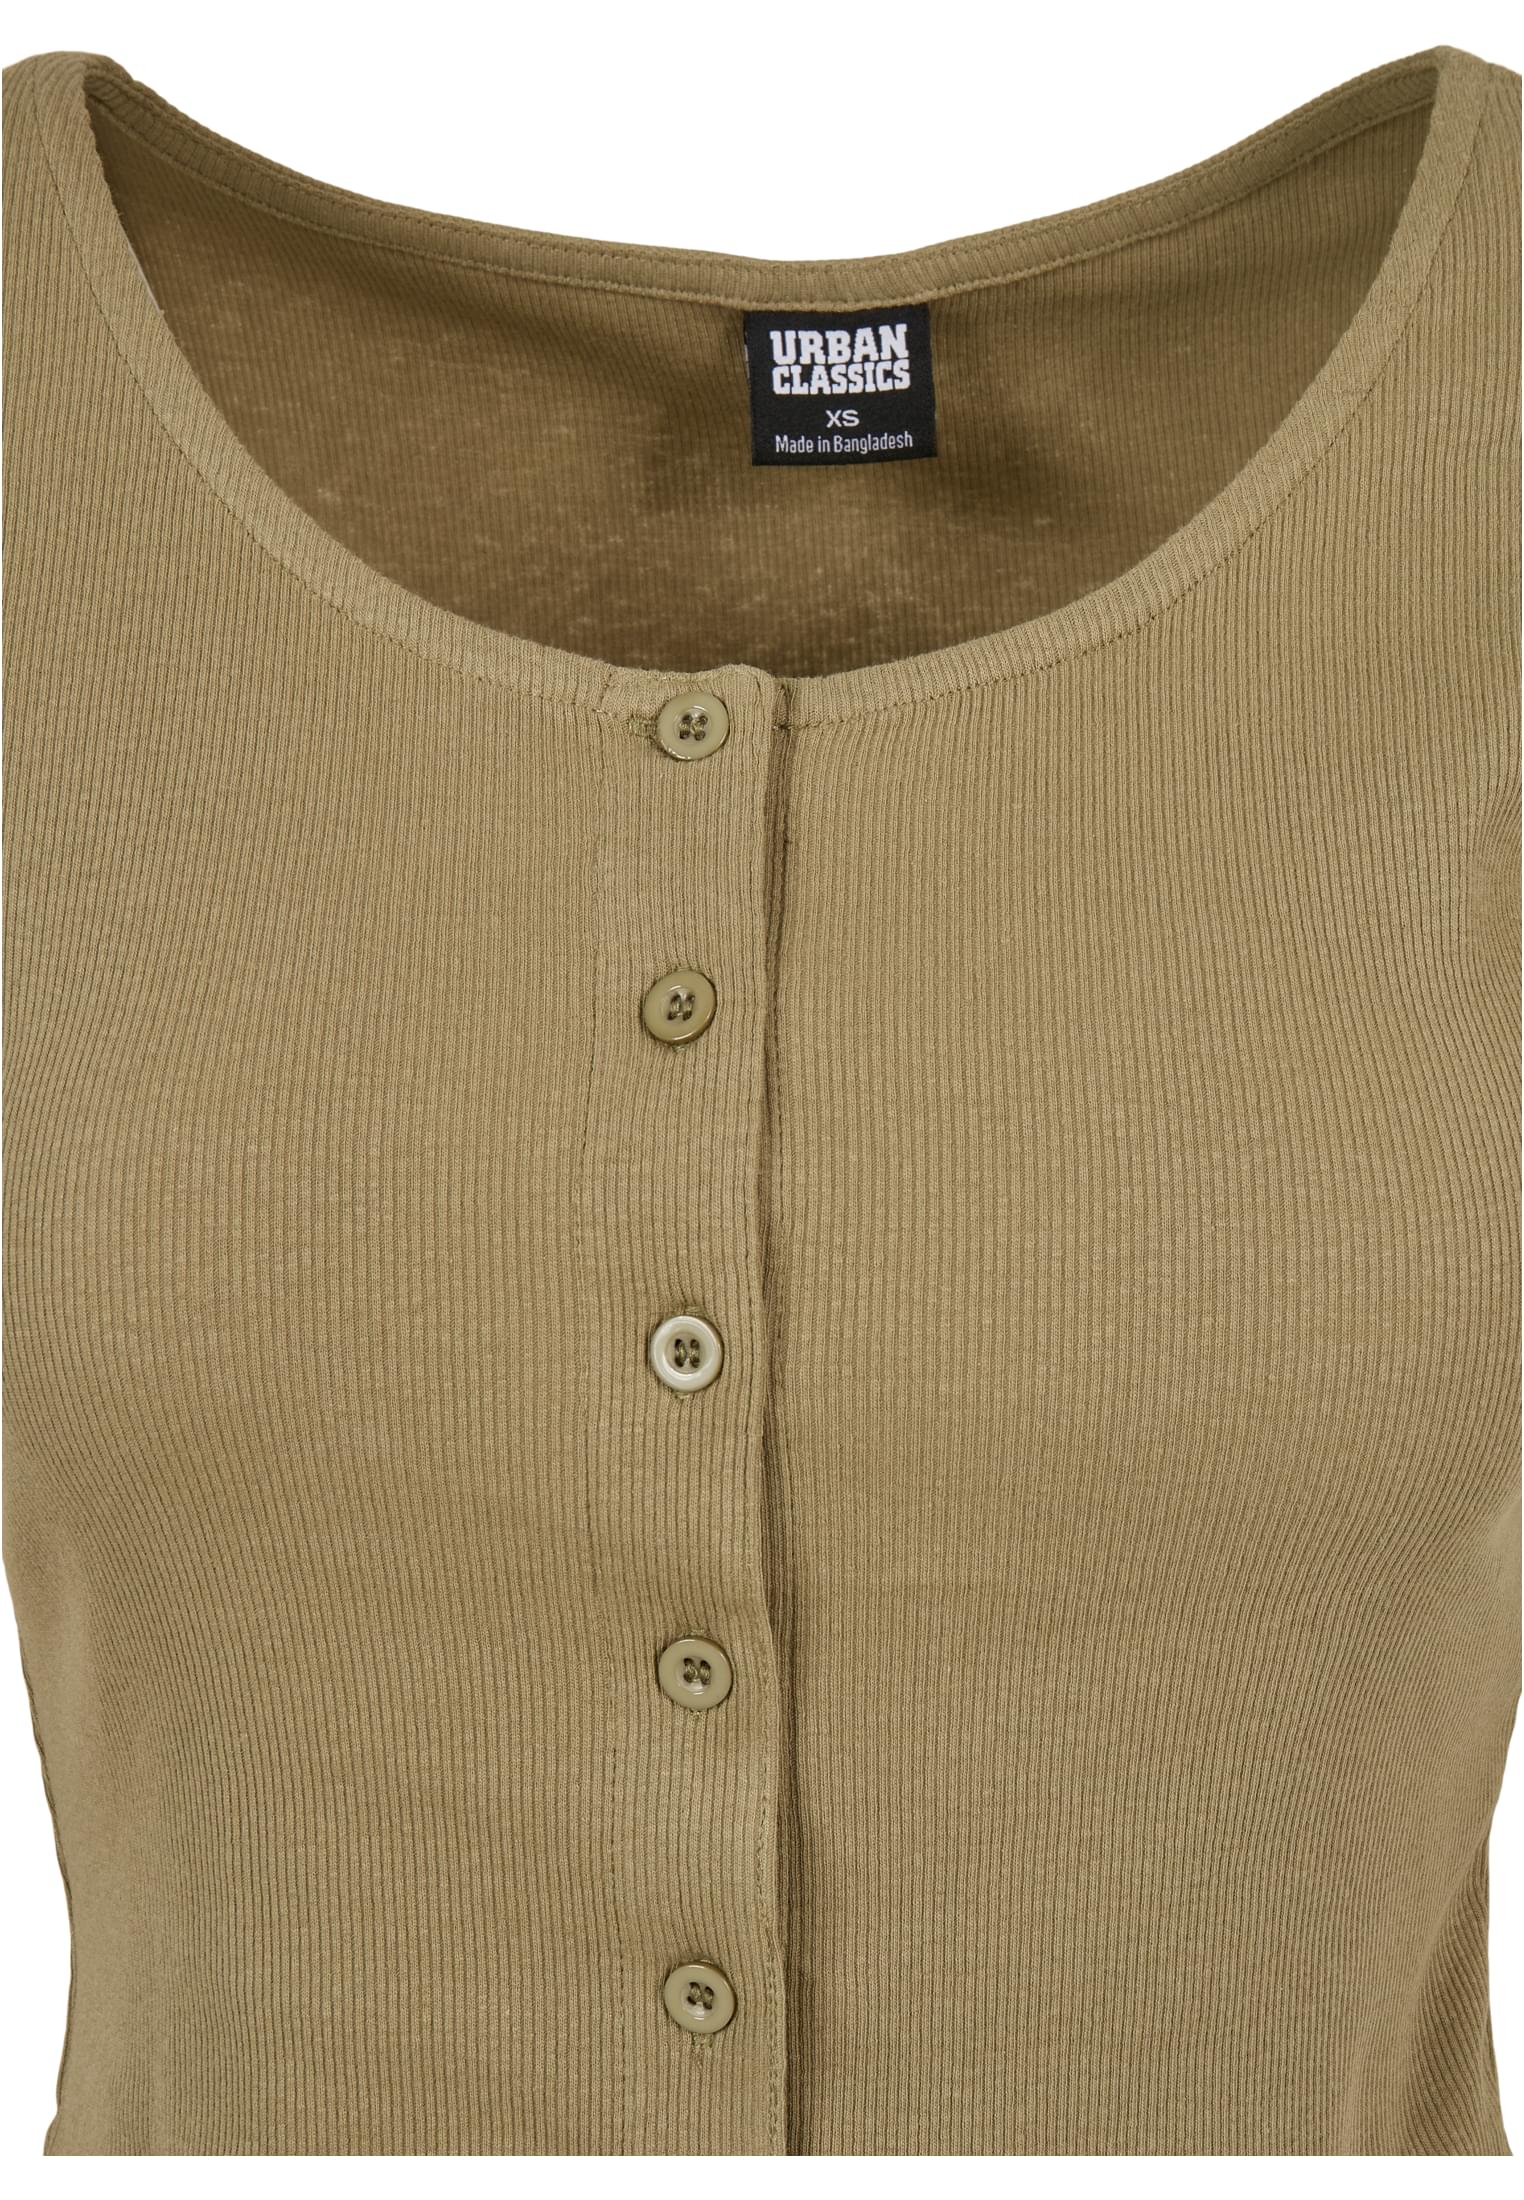 Frauen Ladies Cropped Button Up Rib Tee in Farbe khaki